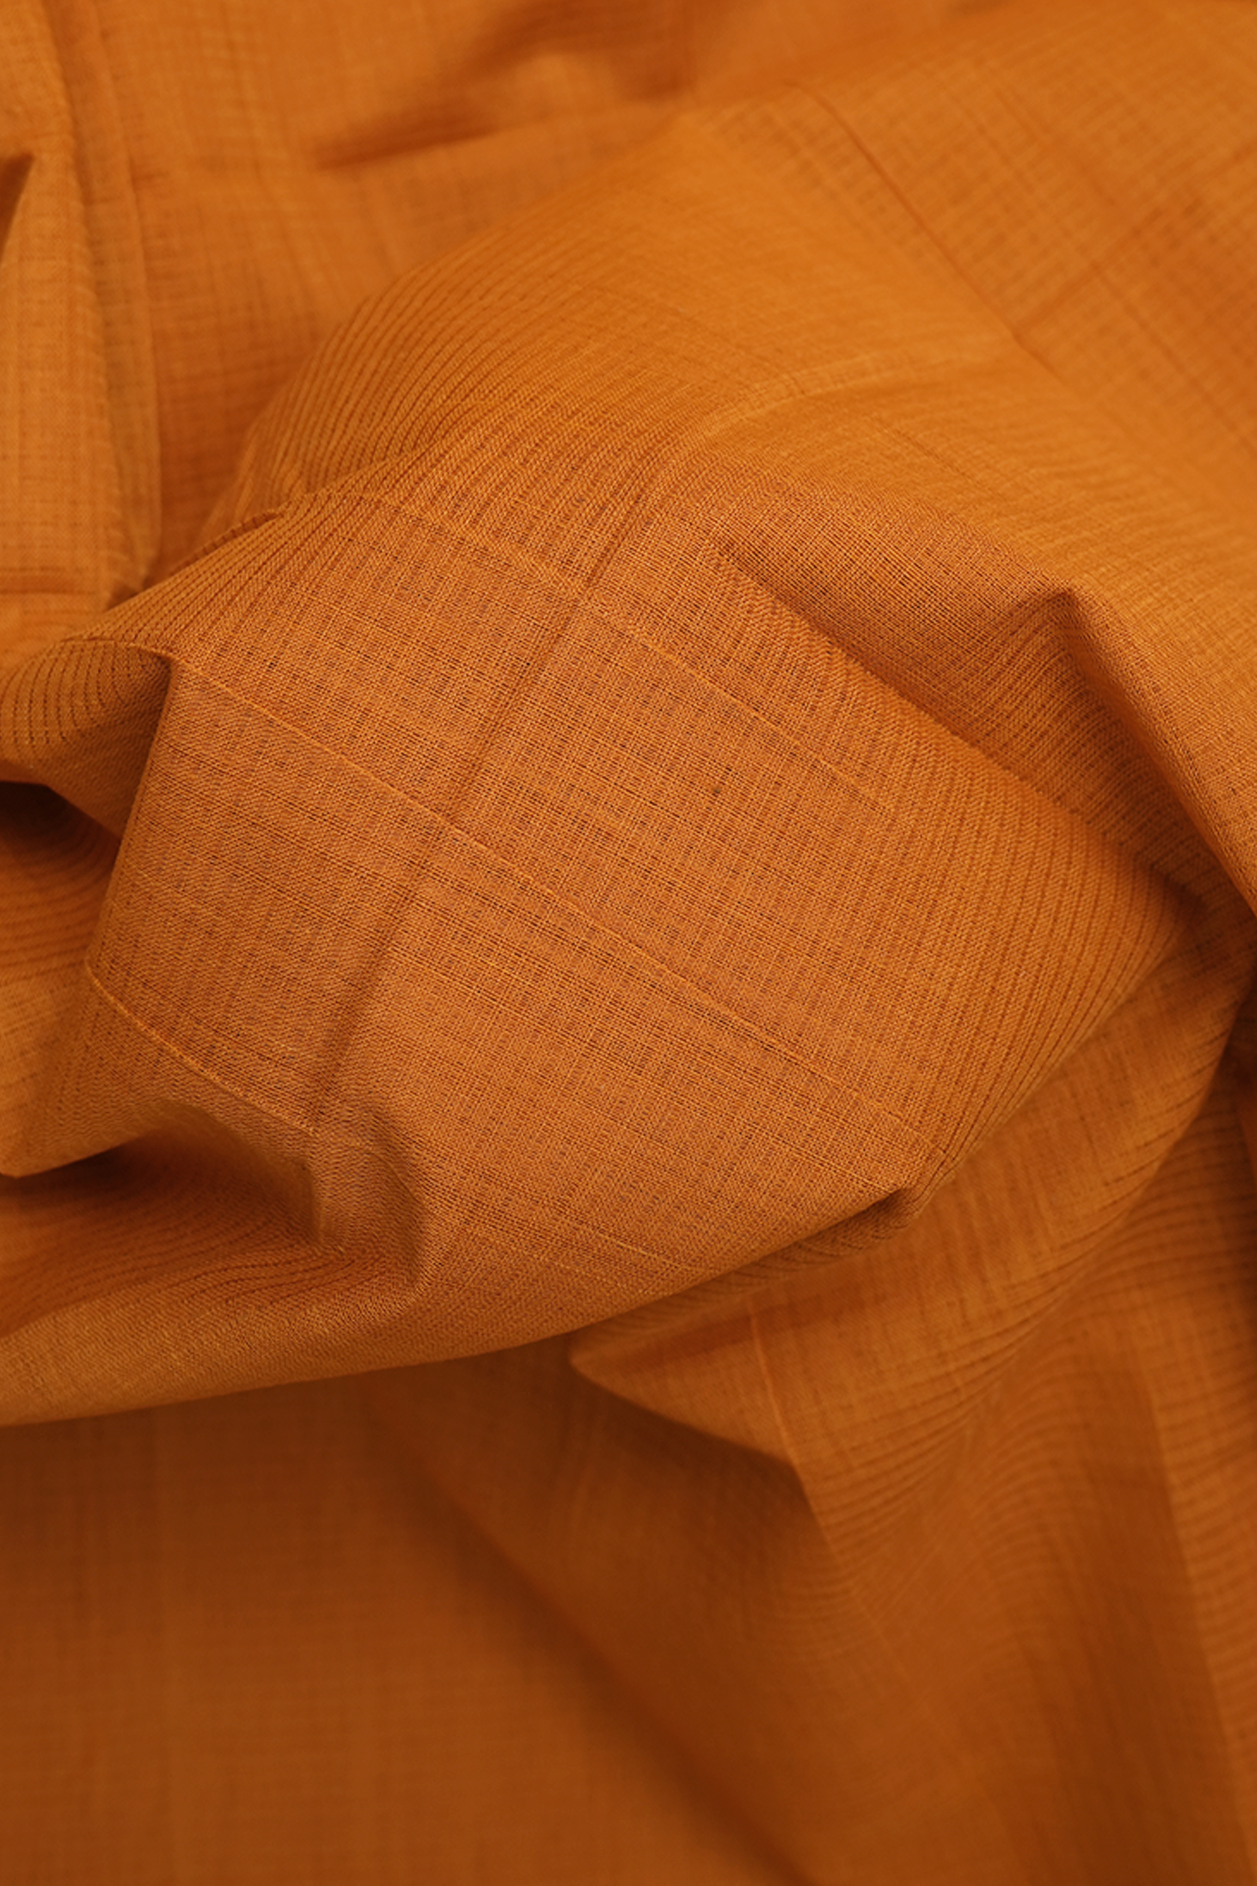 Twill Weave Border Ginger Orange Mangalagiri Cotton Saree